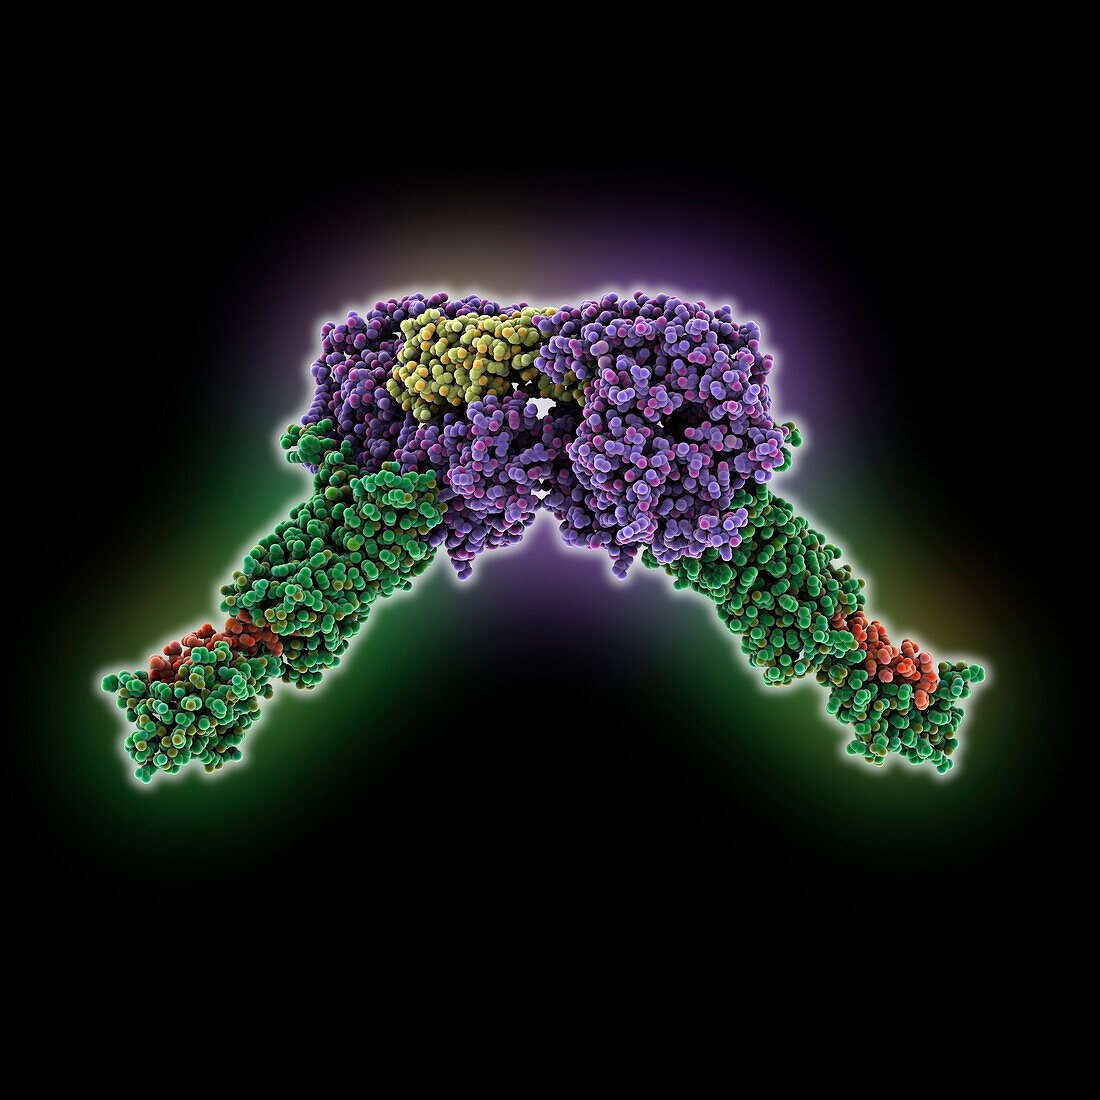 Human parathyroid hormone receptor-1 dimer, illustration